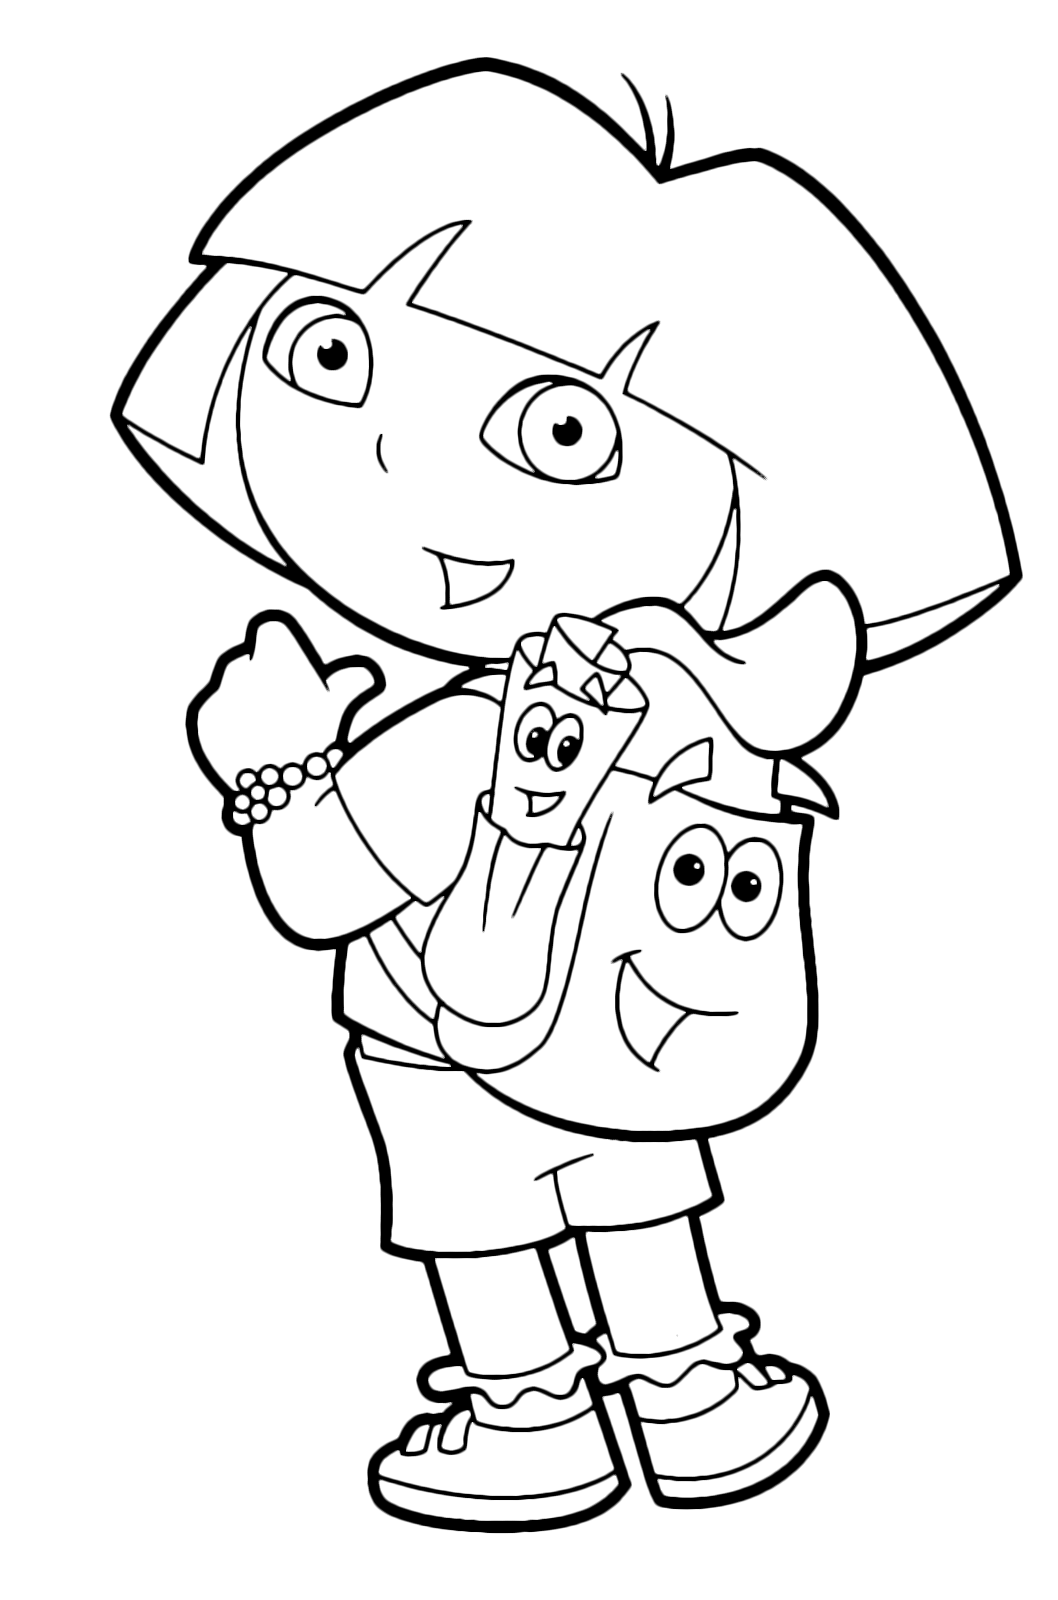 "Dora the Explorer" coloring pages